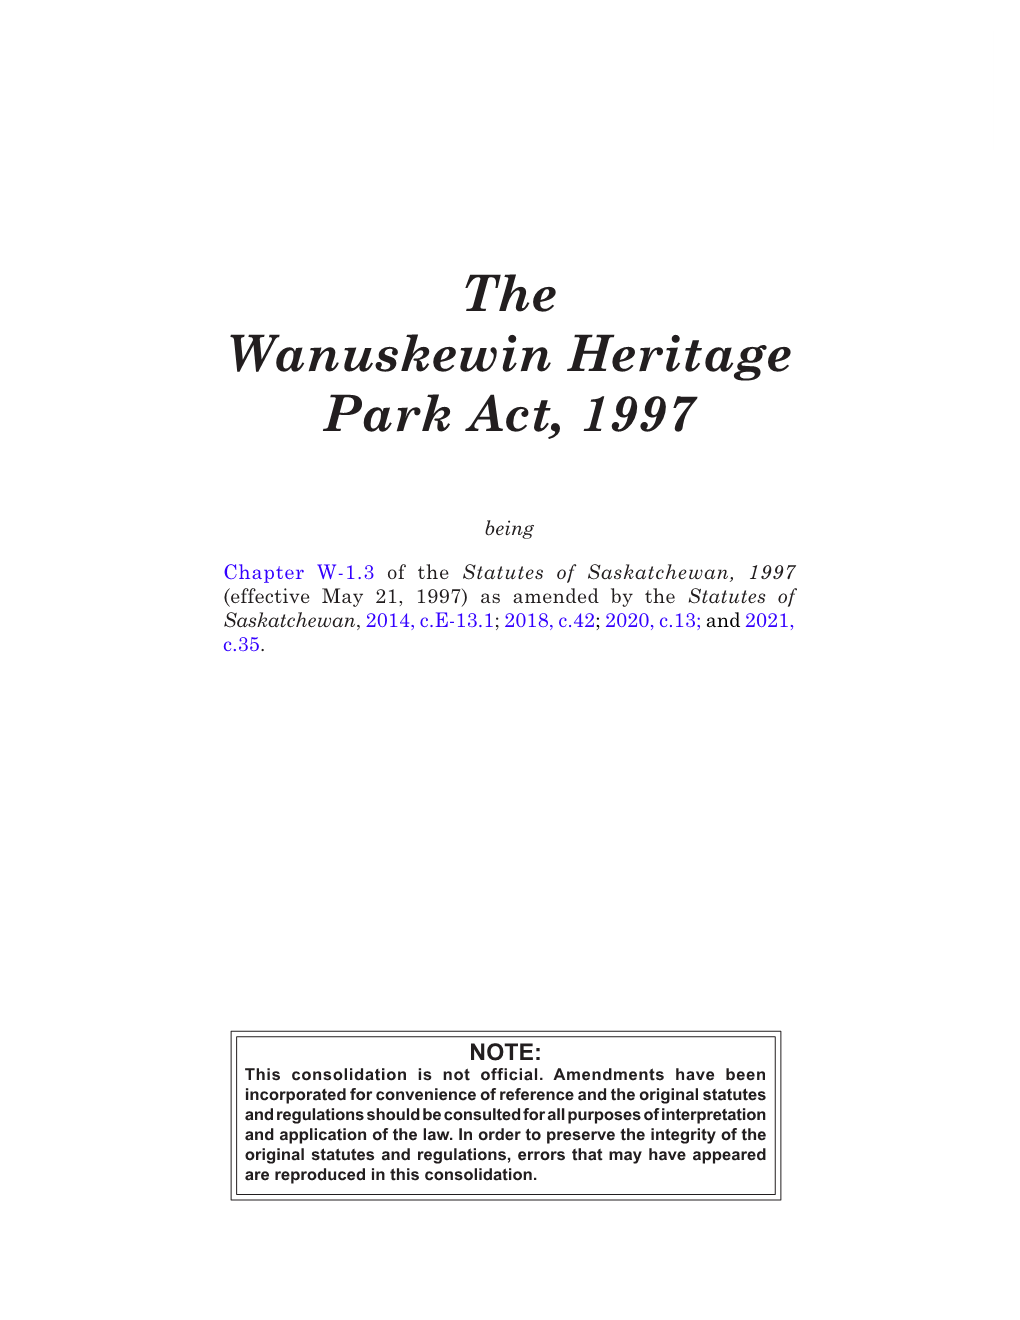 Wanuskewin Heritage Park Act, 1997, W-1.3